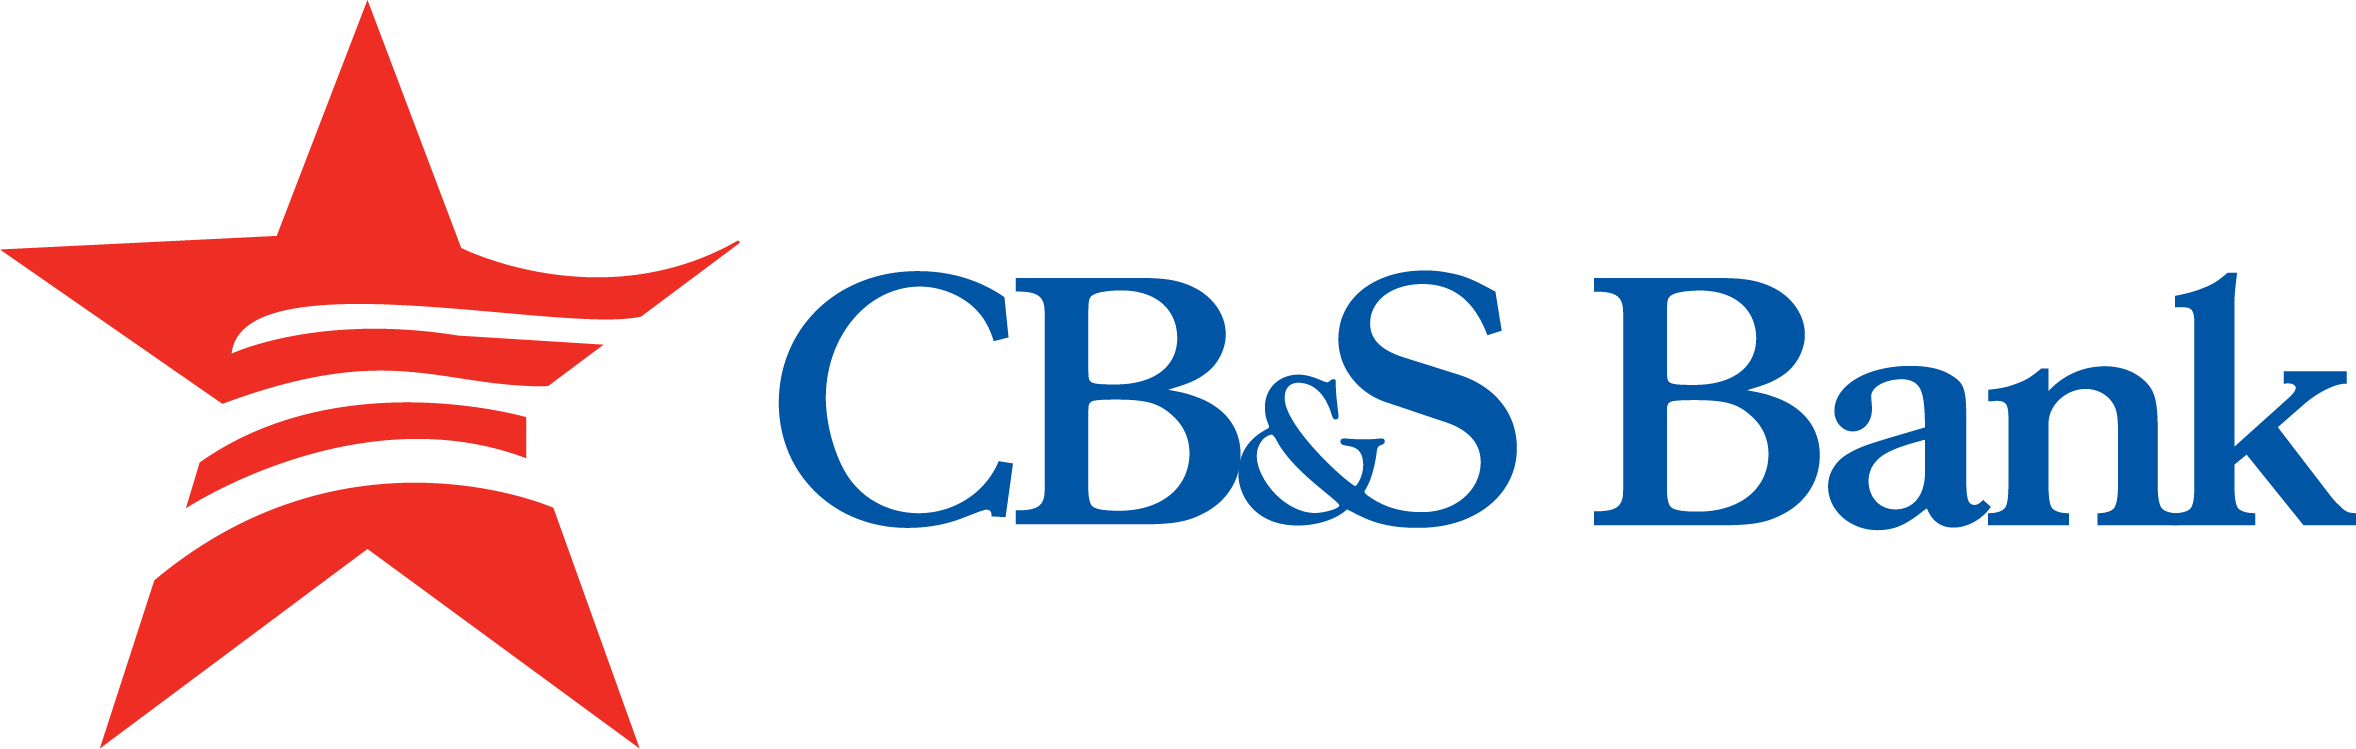 CB&S Bank, Inc's Logo